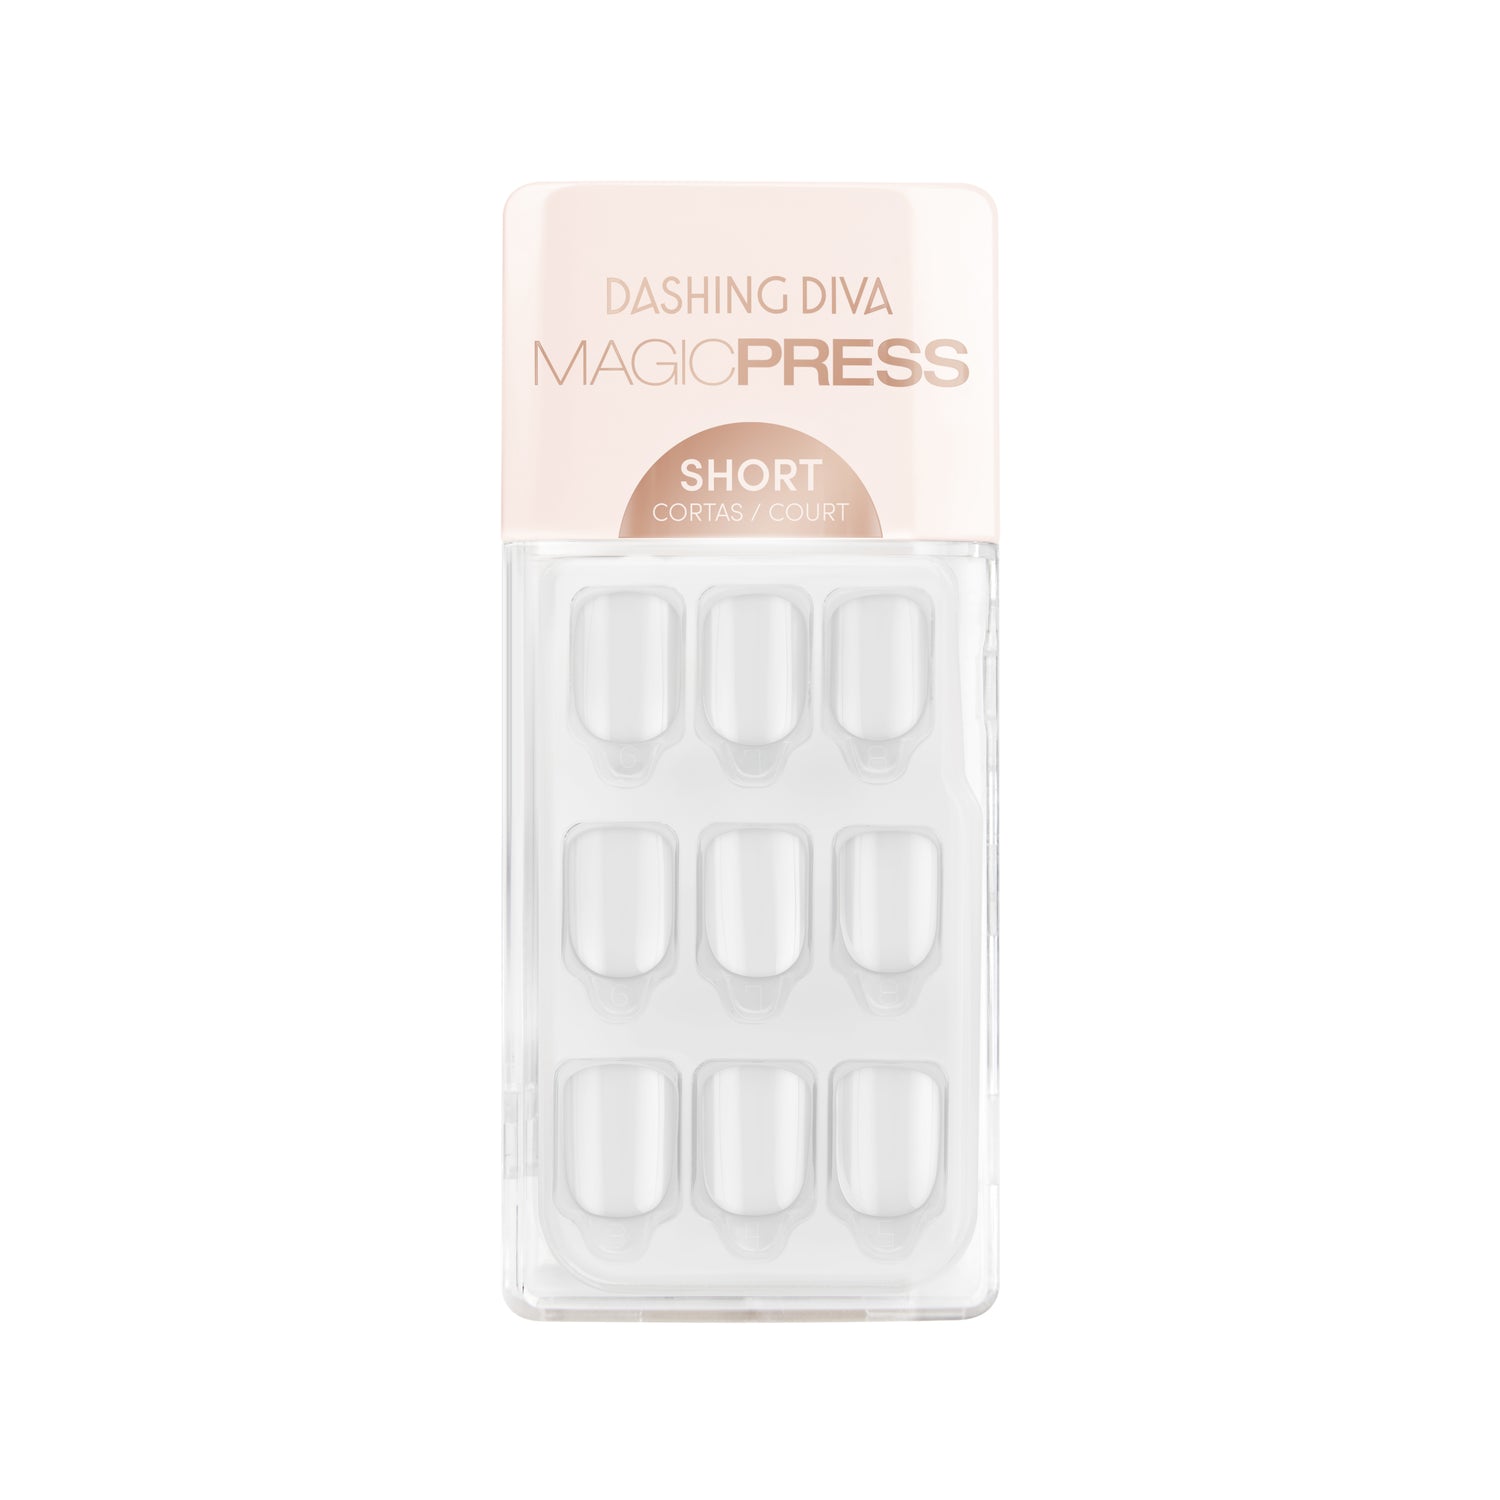 Dashing Diva MAGIC PRESS short, square white press on gel nails.